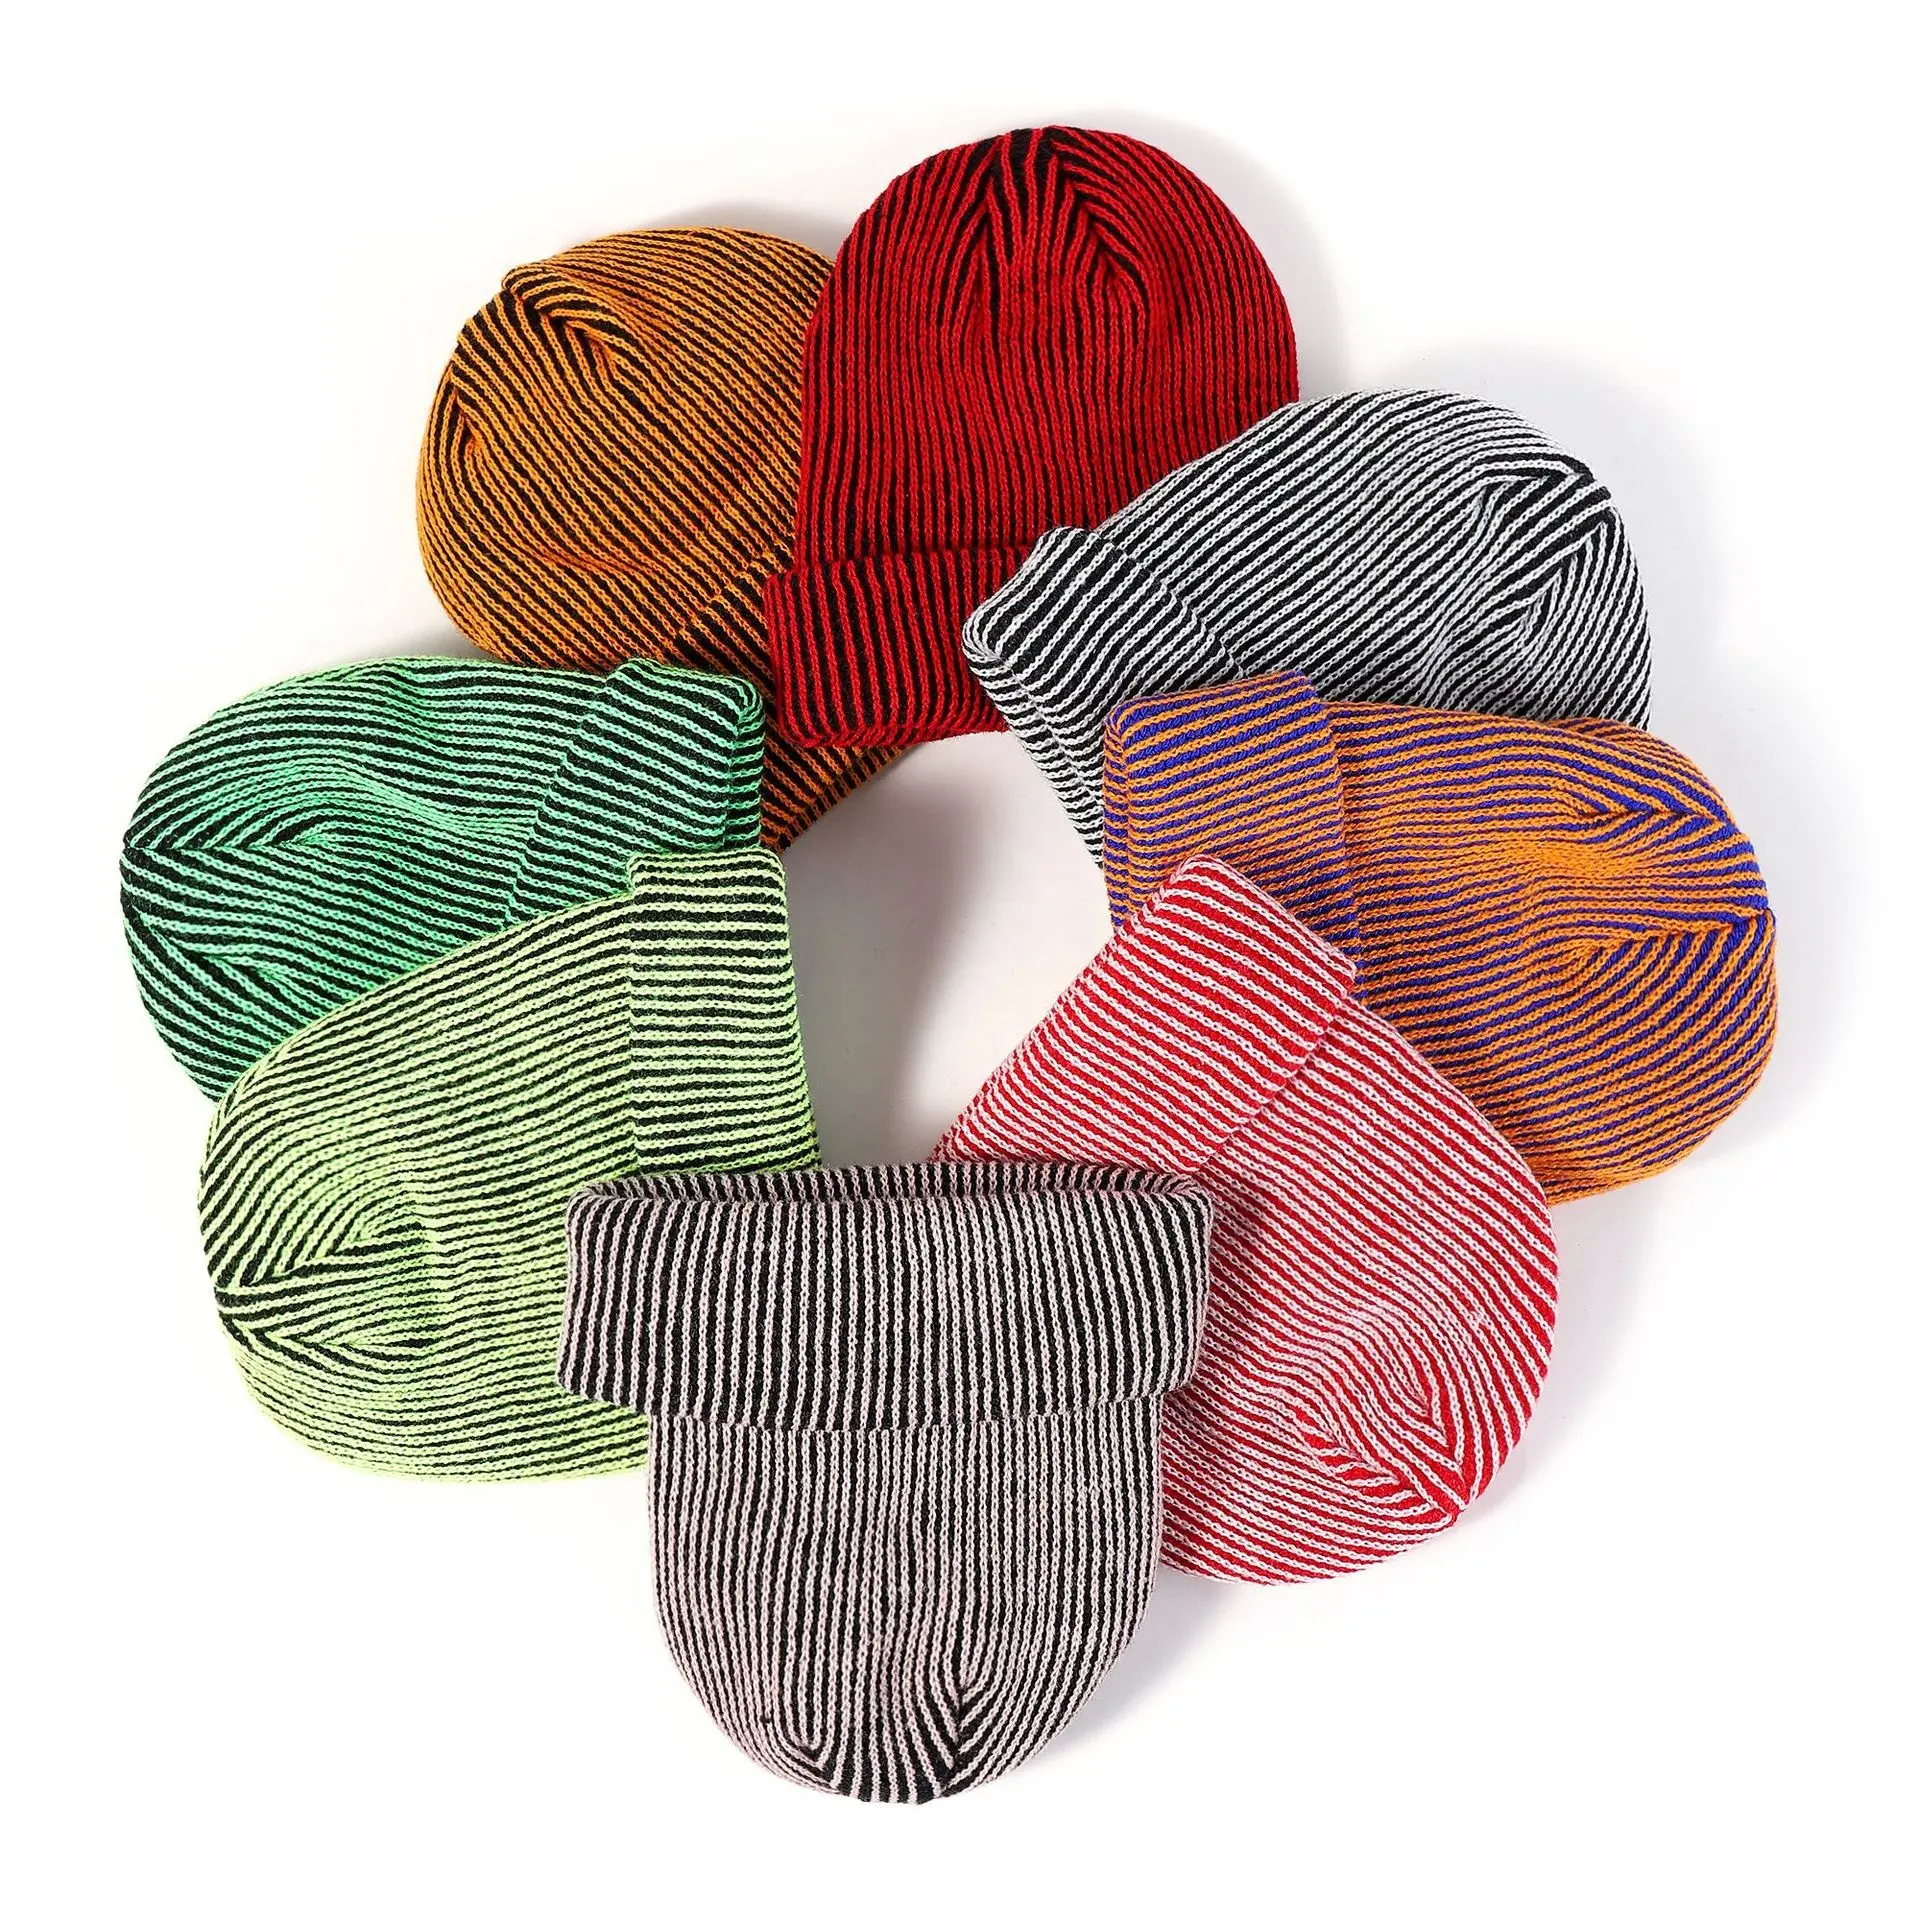 Sombreros de punto a rayas para invierno, sombrero de lana para exteriores, acrílico, protección para la oreja, visera rizada cálida, dos tonos, rayas